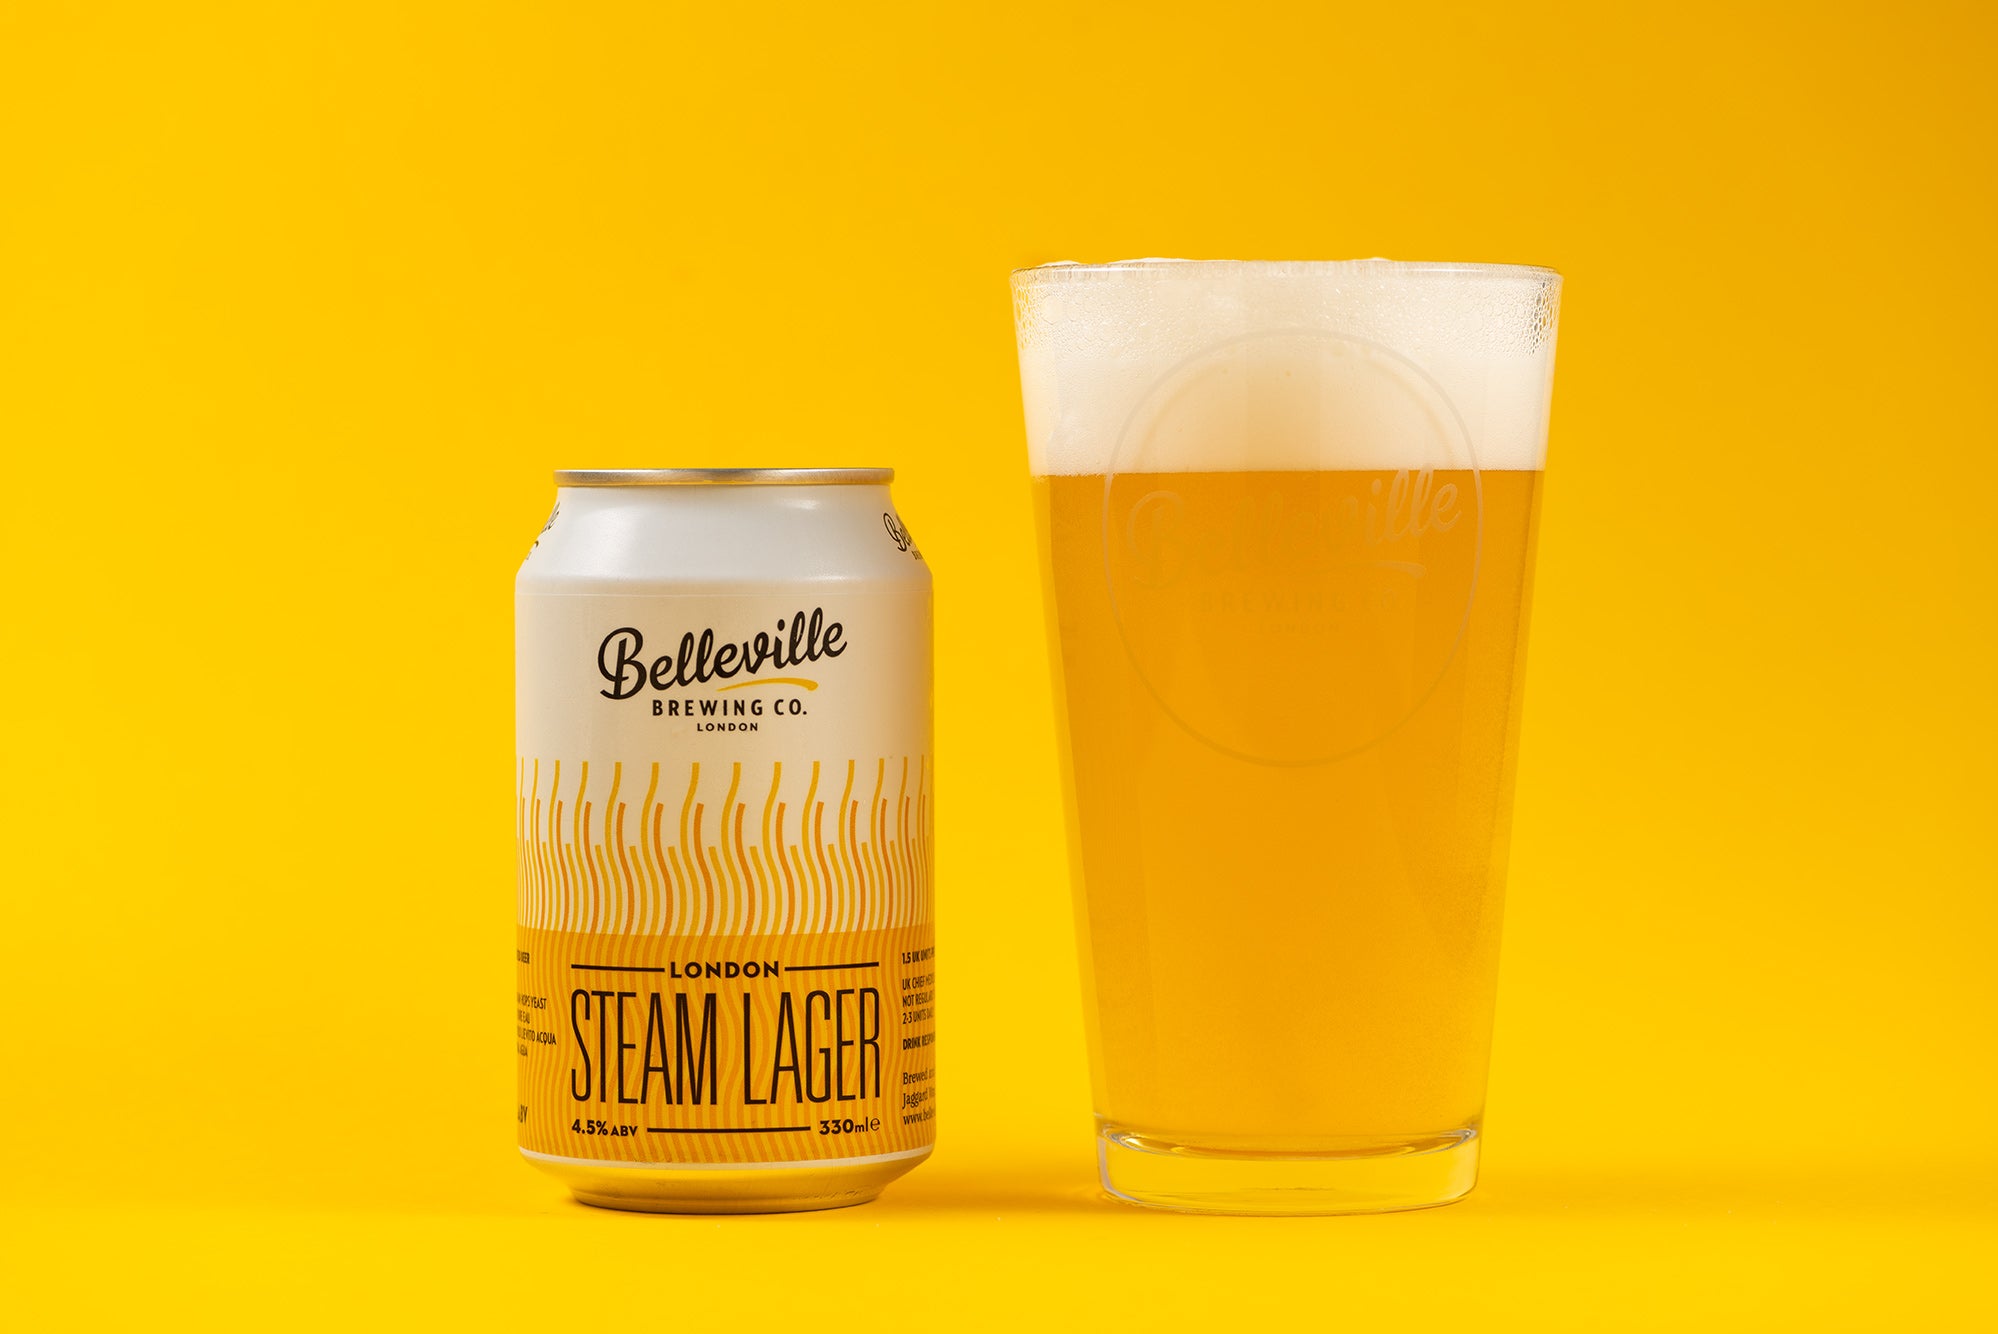 London Steam Lager (4.5%) – Belleville Brewing Co